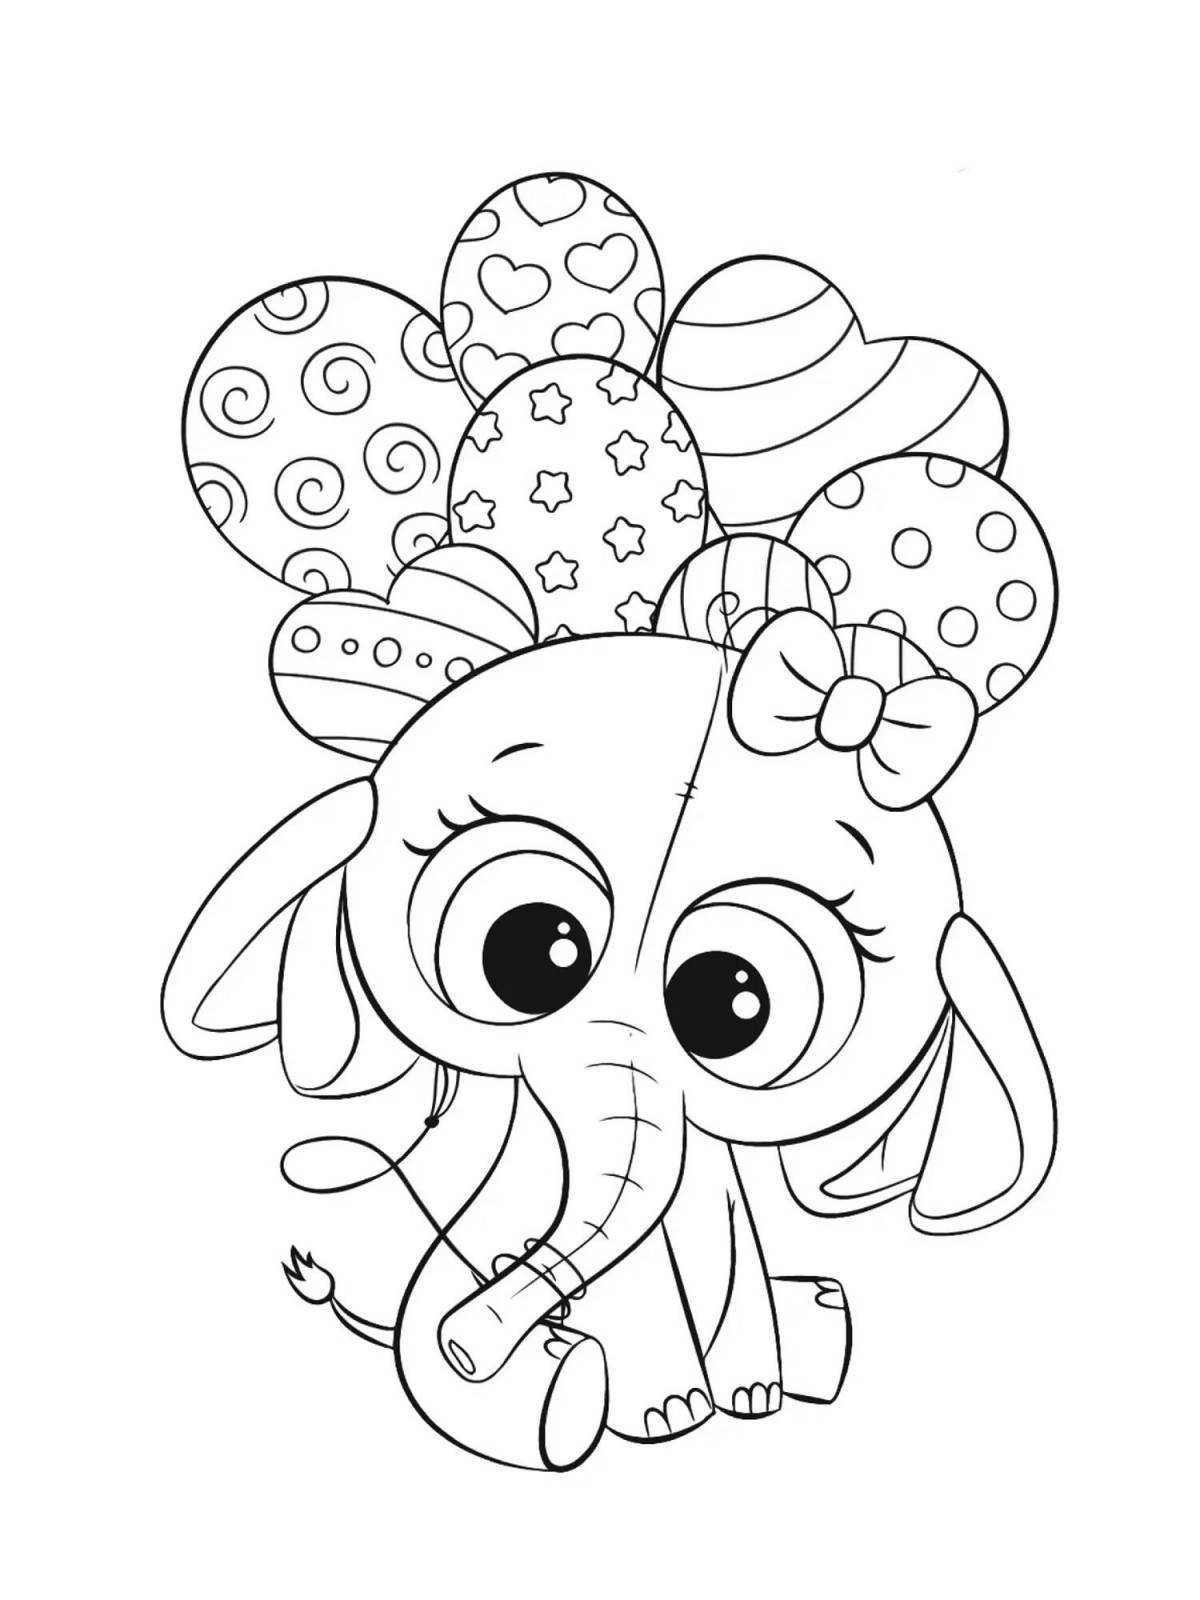 Joyful elephant coloring book